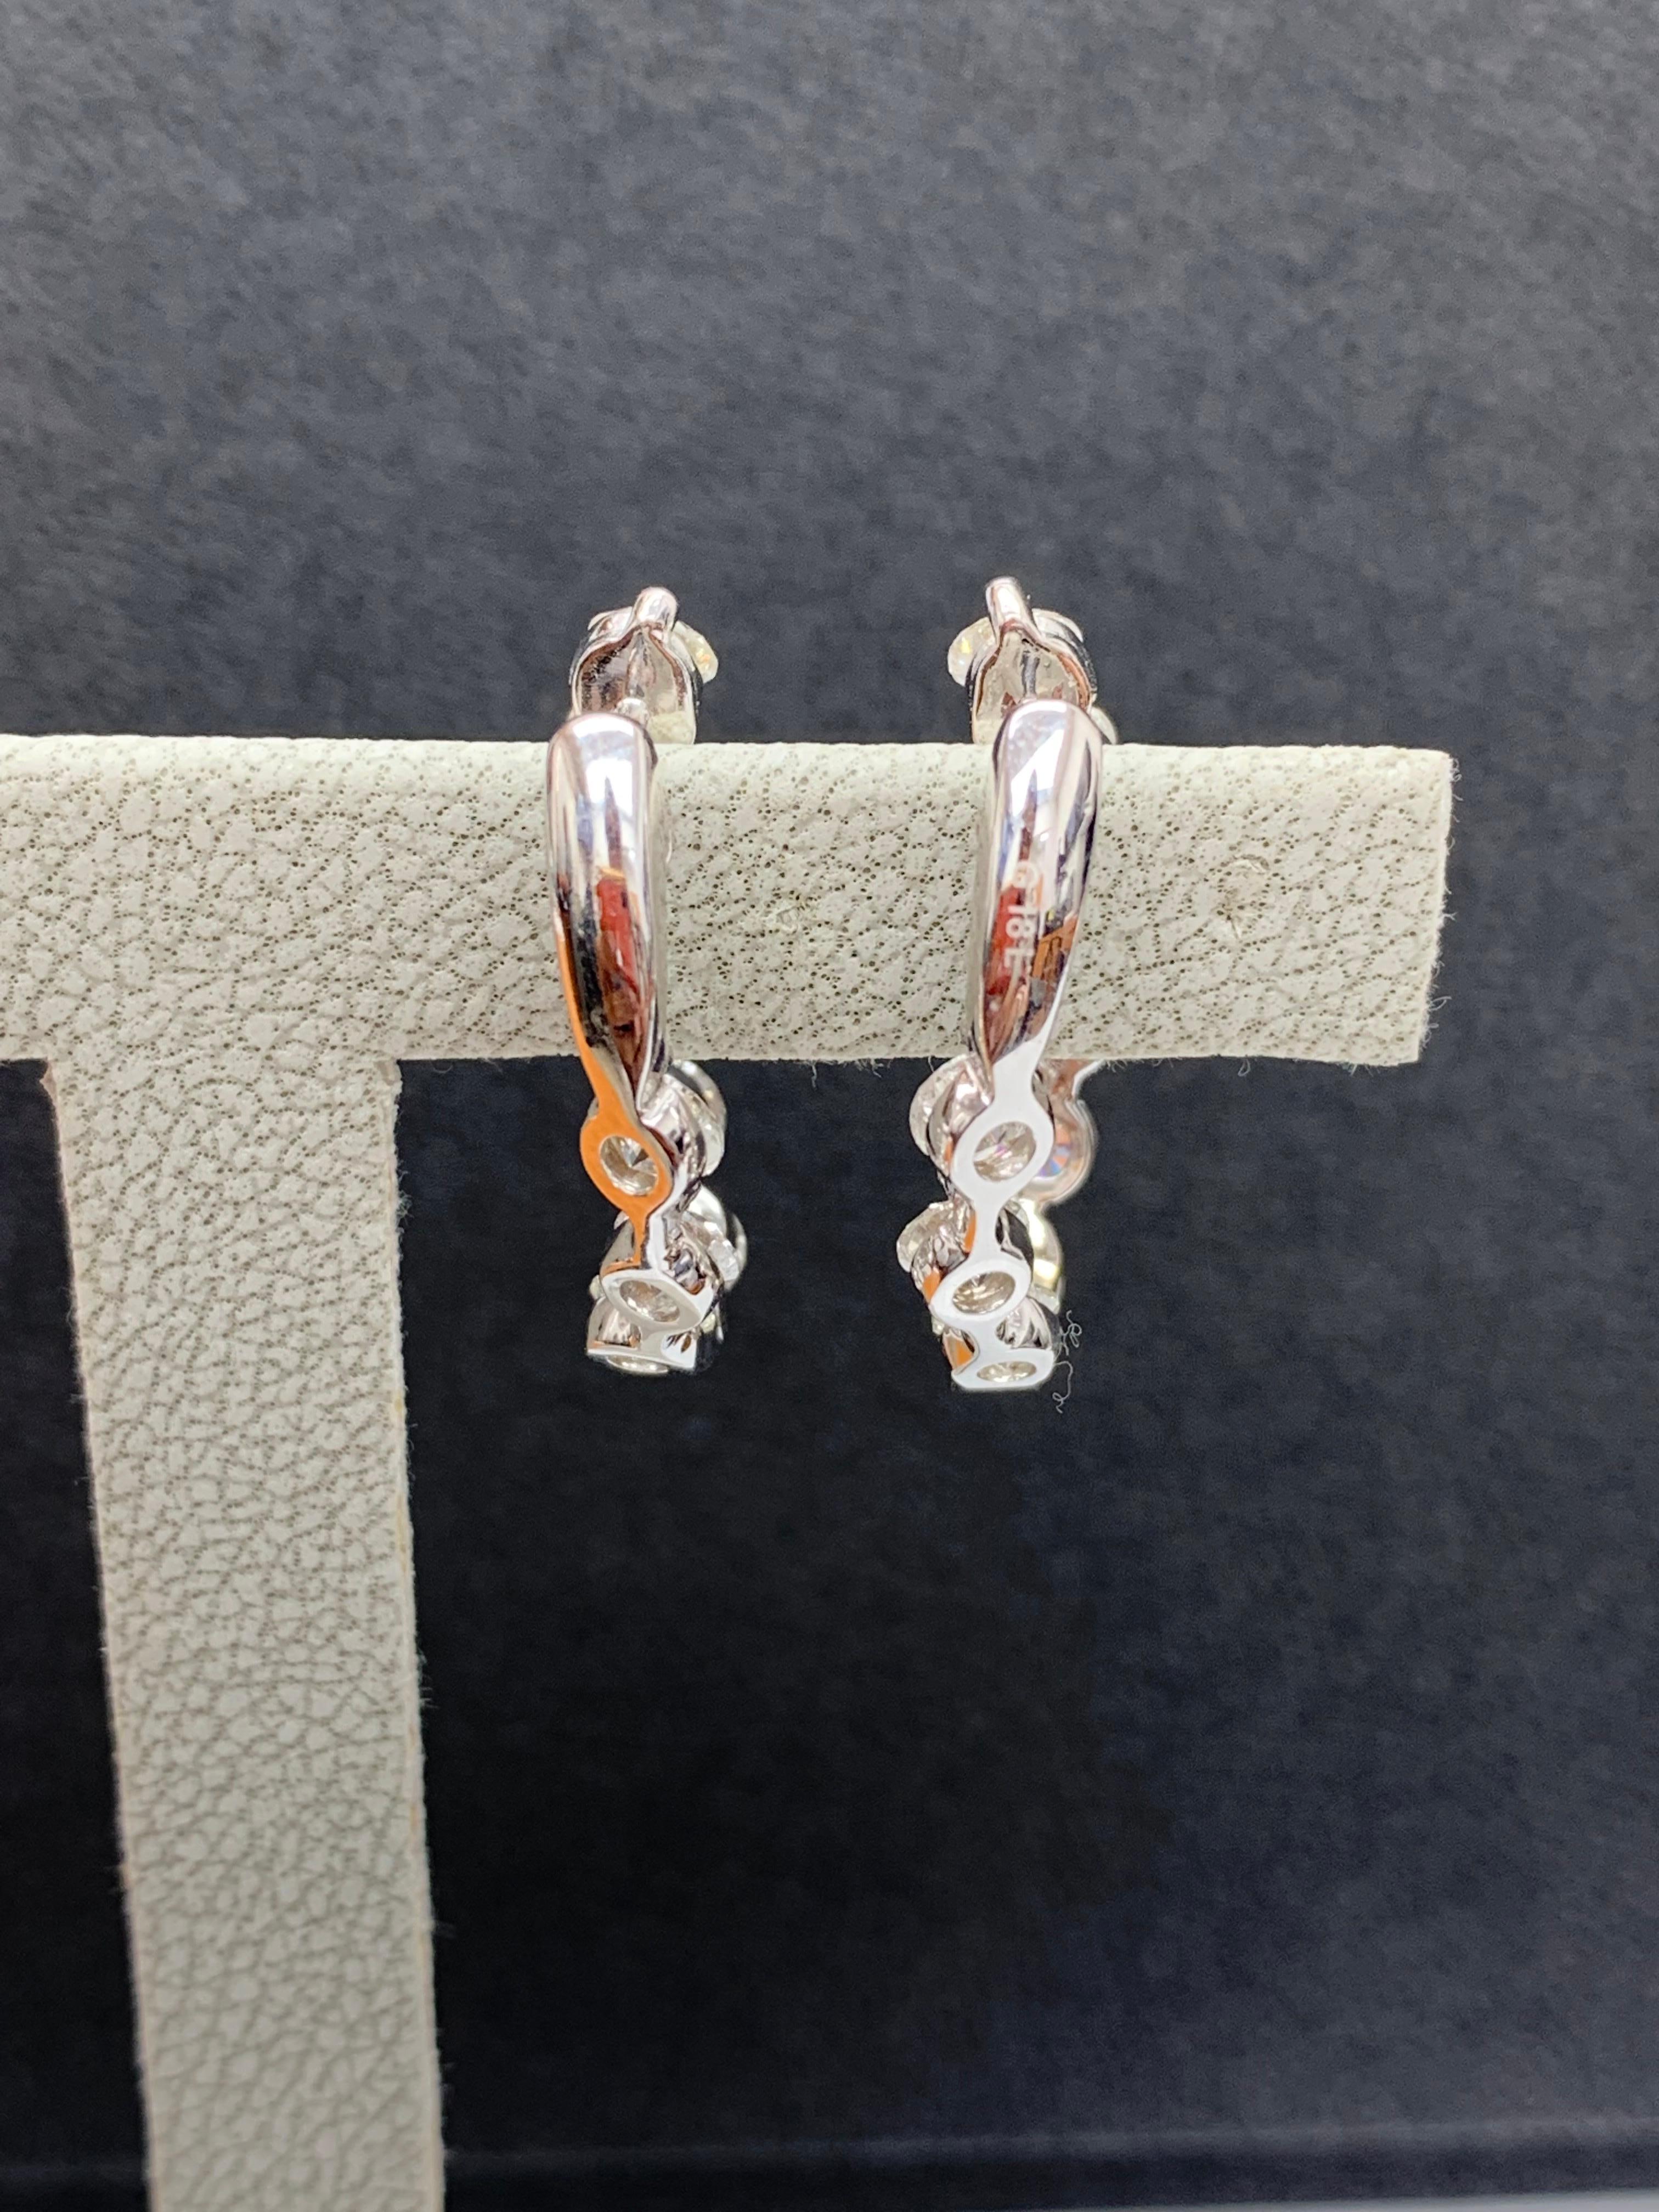 2.10 Carat Round Cut Diamond Hoop Earrings in 14k White Gold For Sale 1